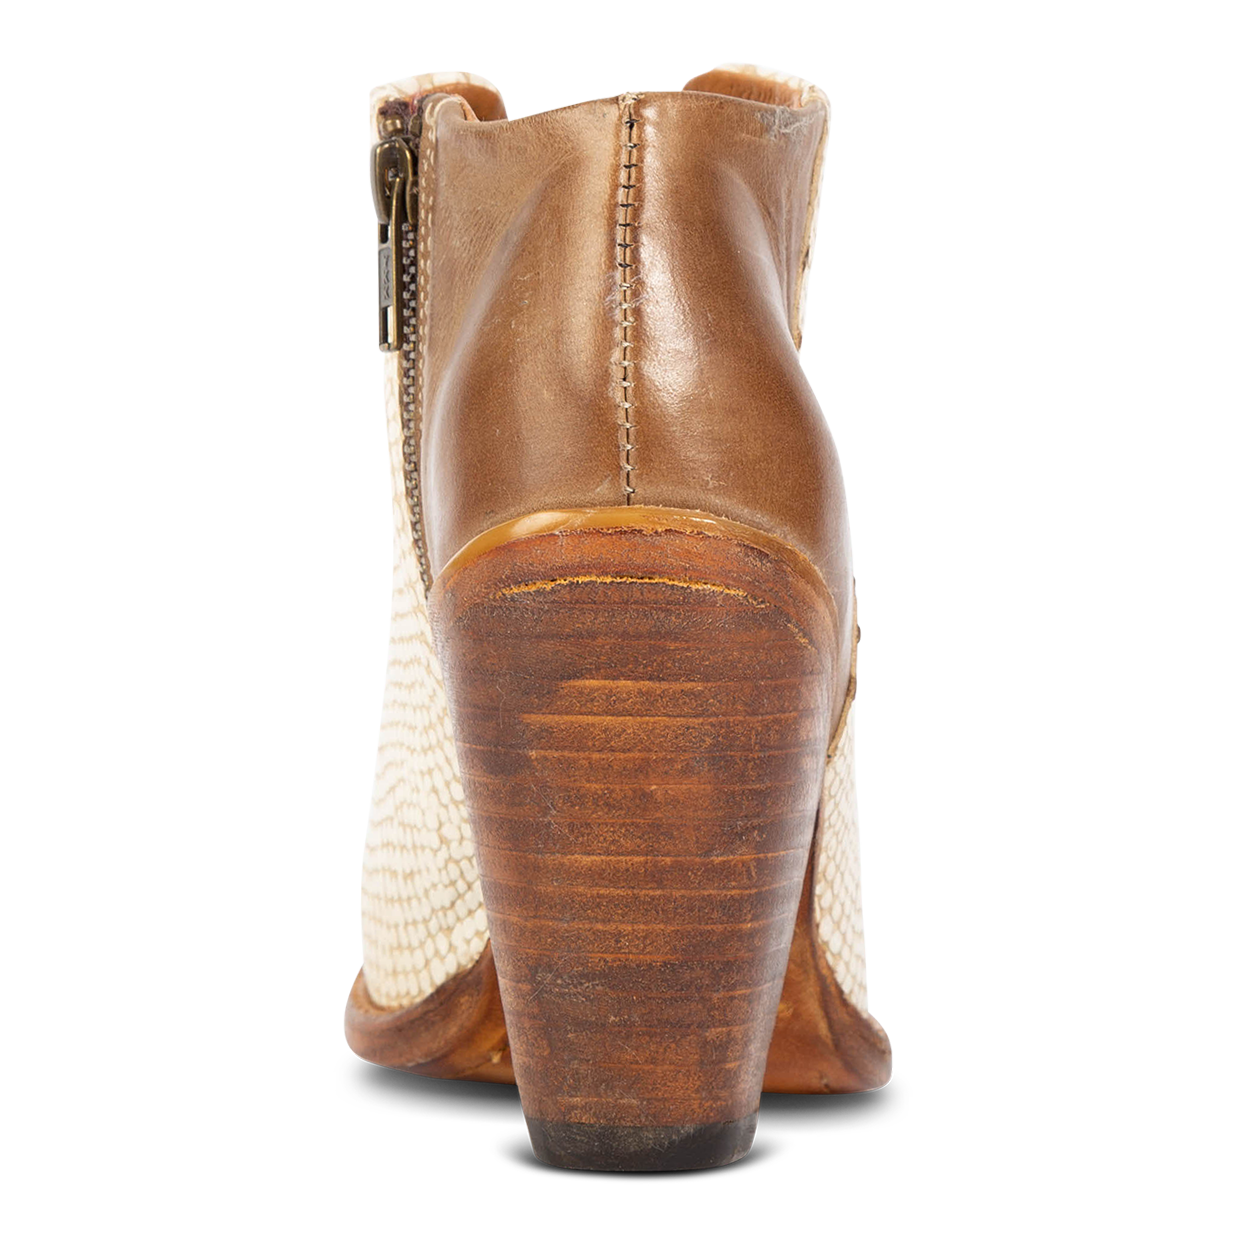 Back view showing inverted wooden heel on FREEBIRD women's Detroit white snake bootie